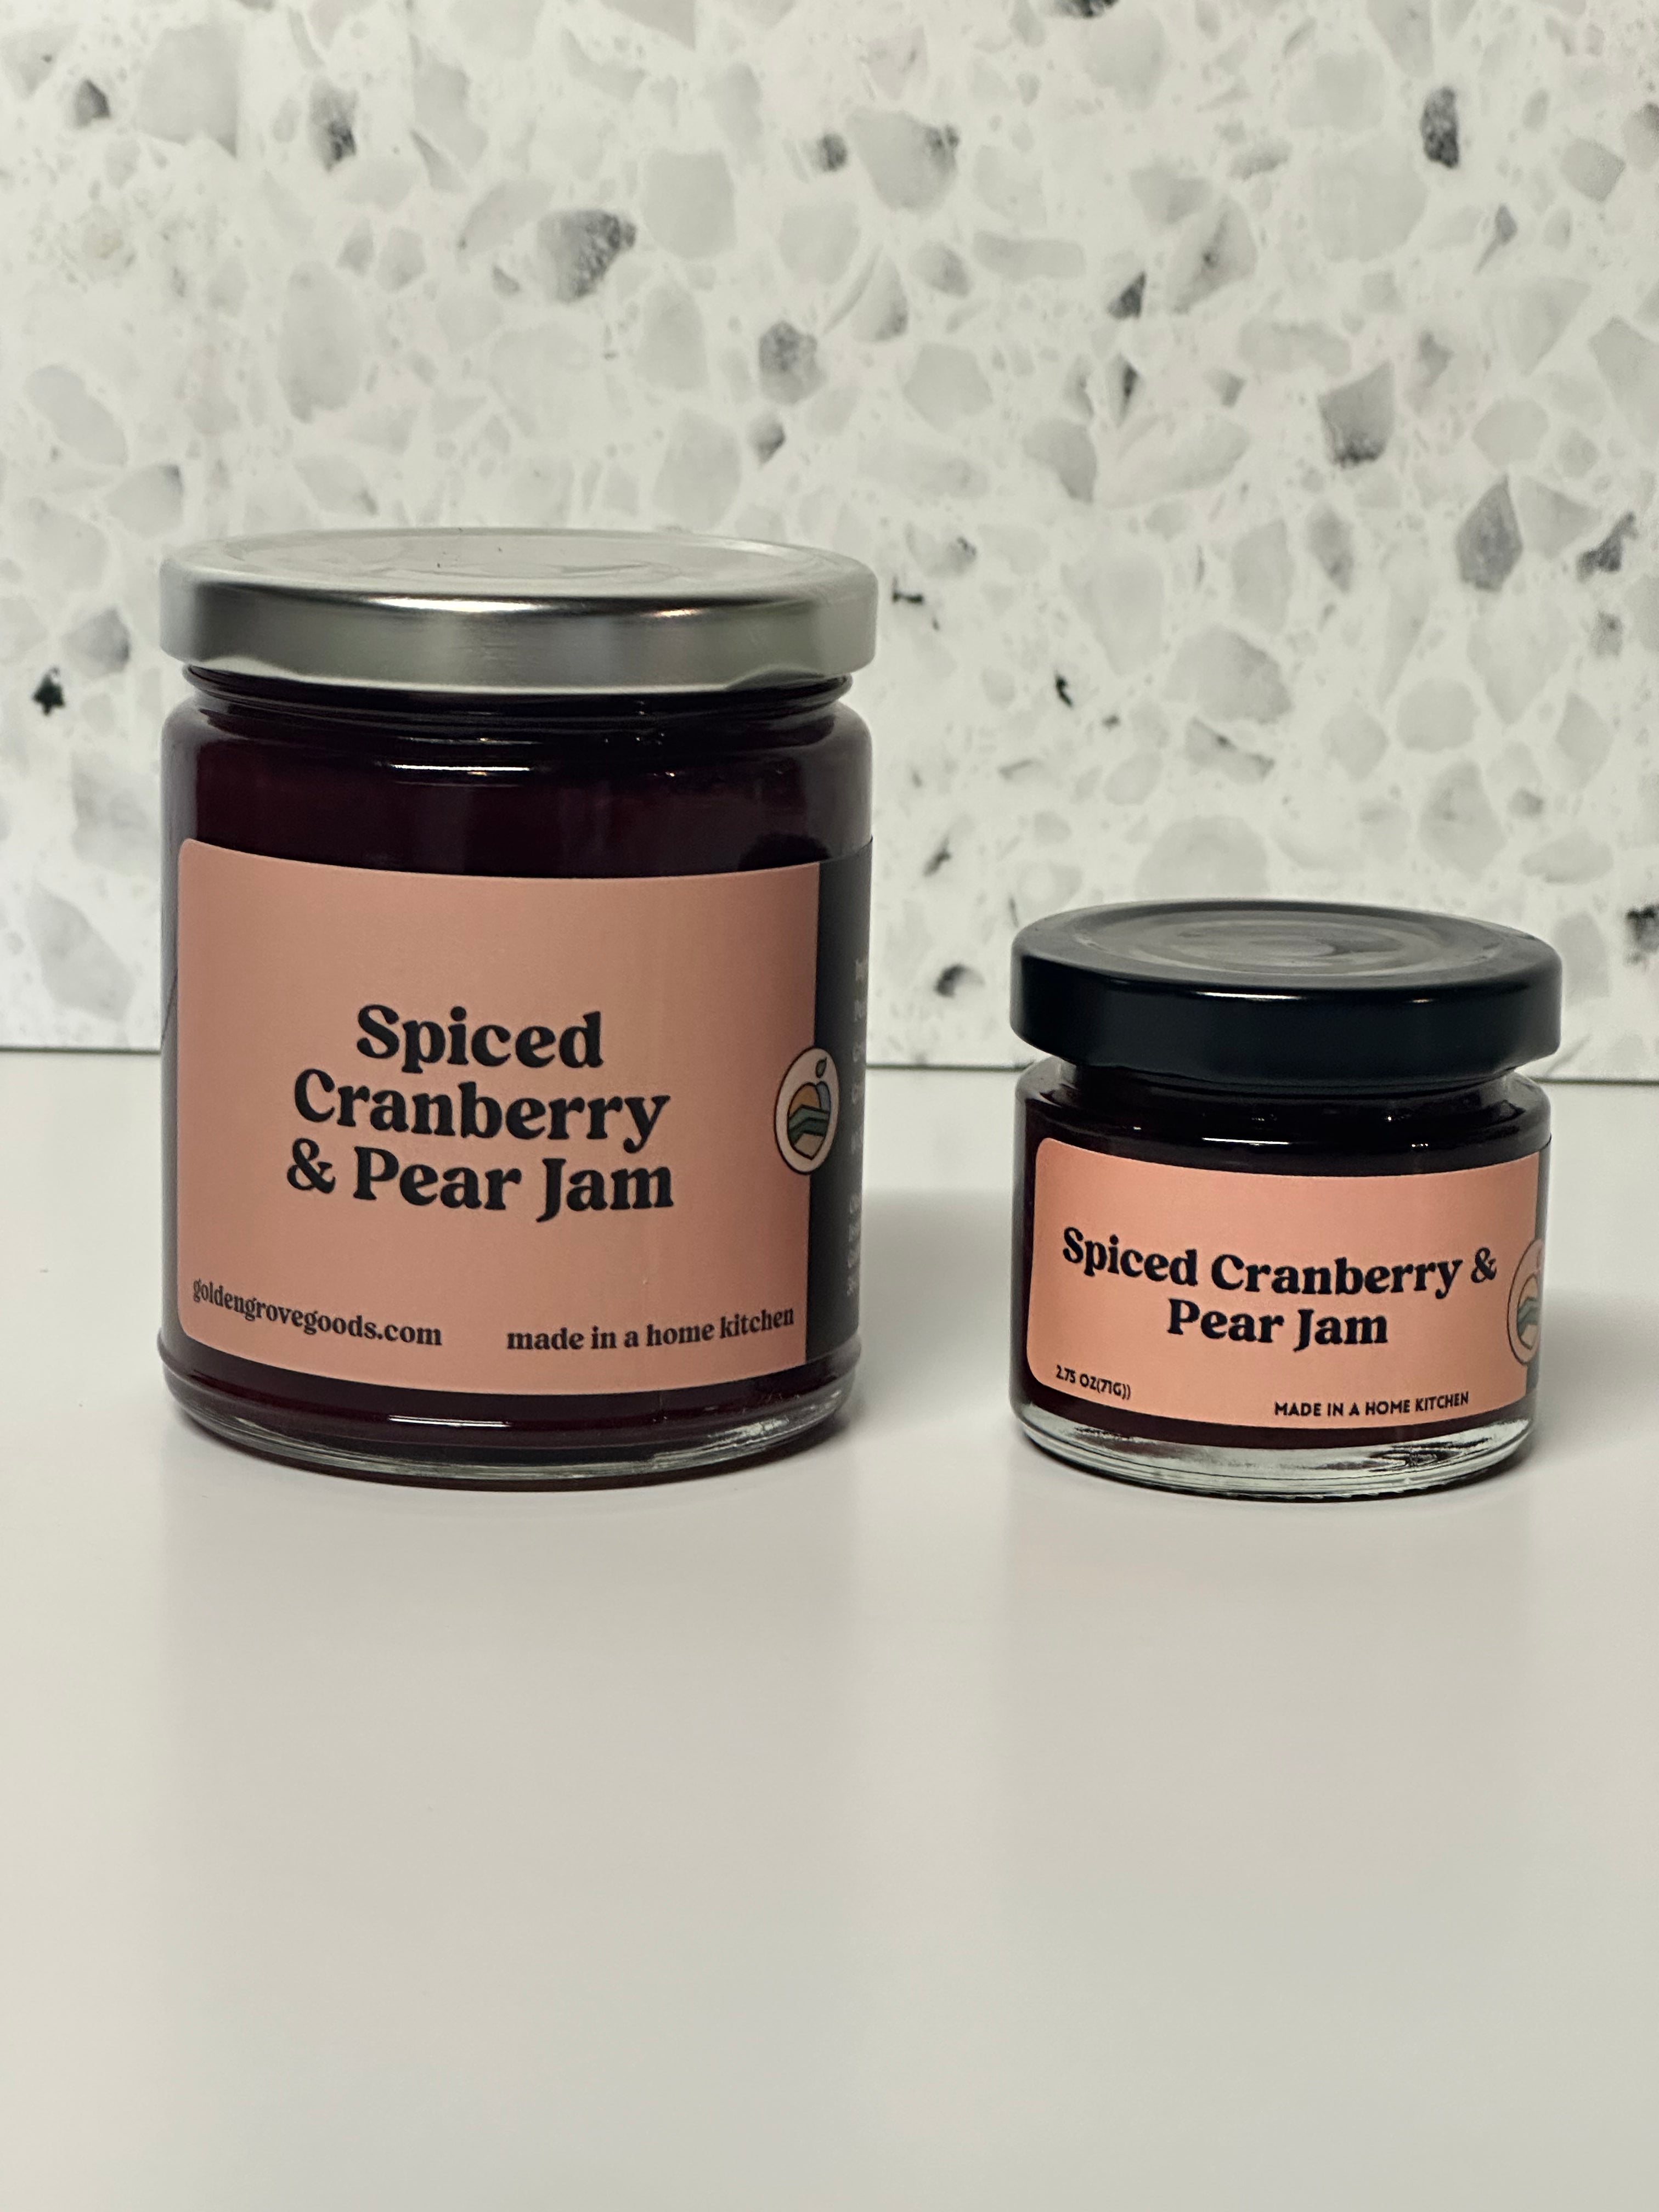 Spiced Cranberry & Pear Jam